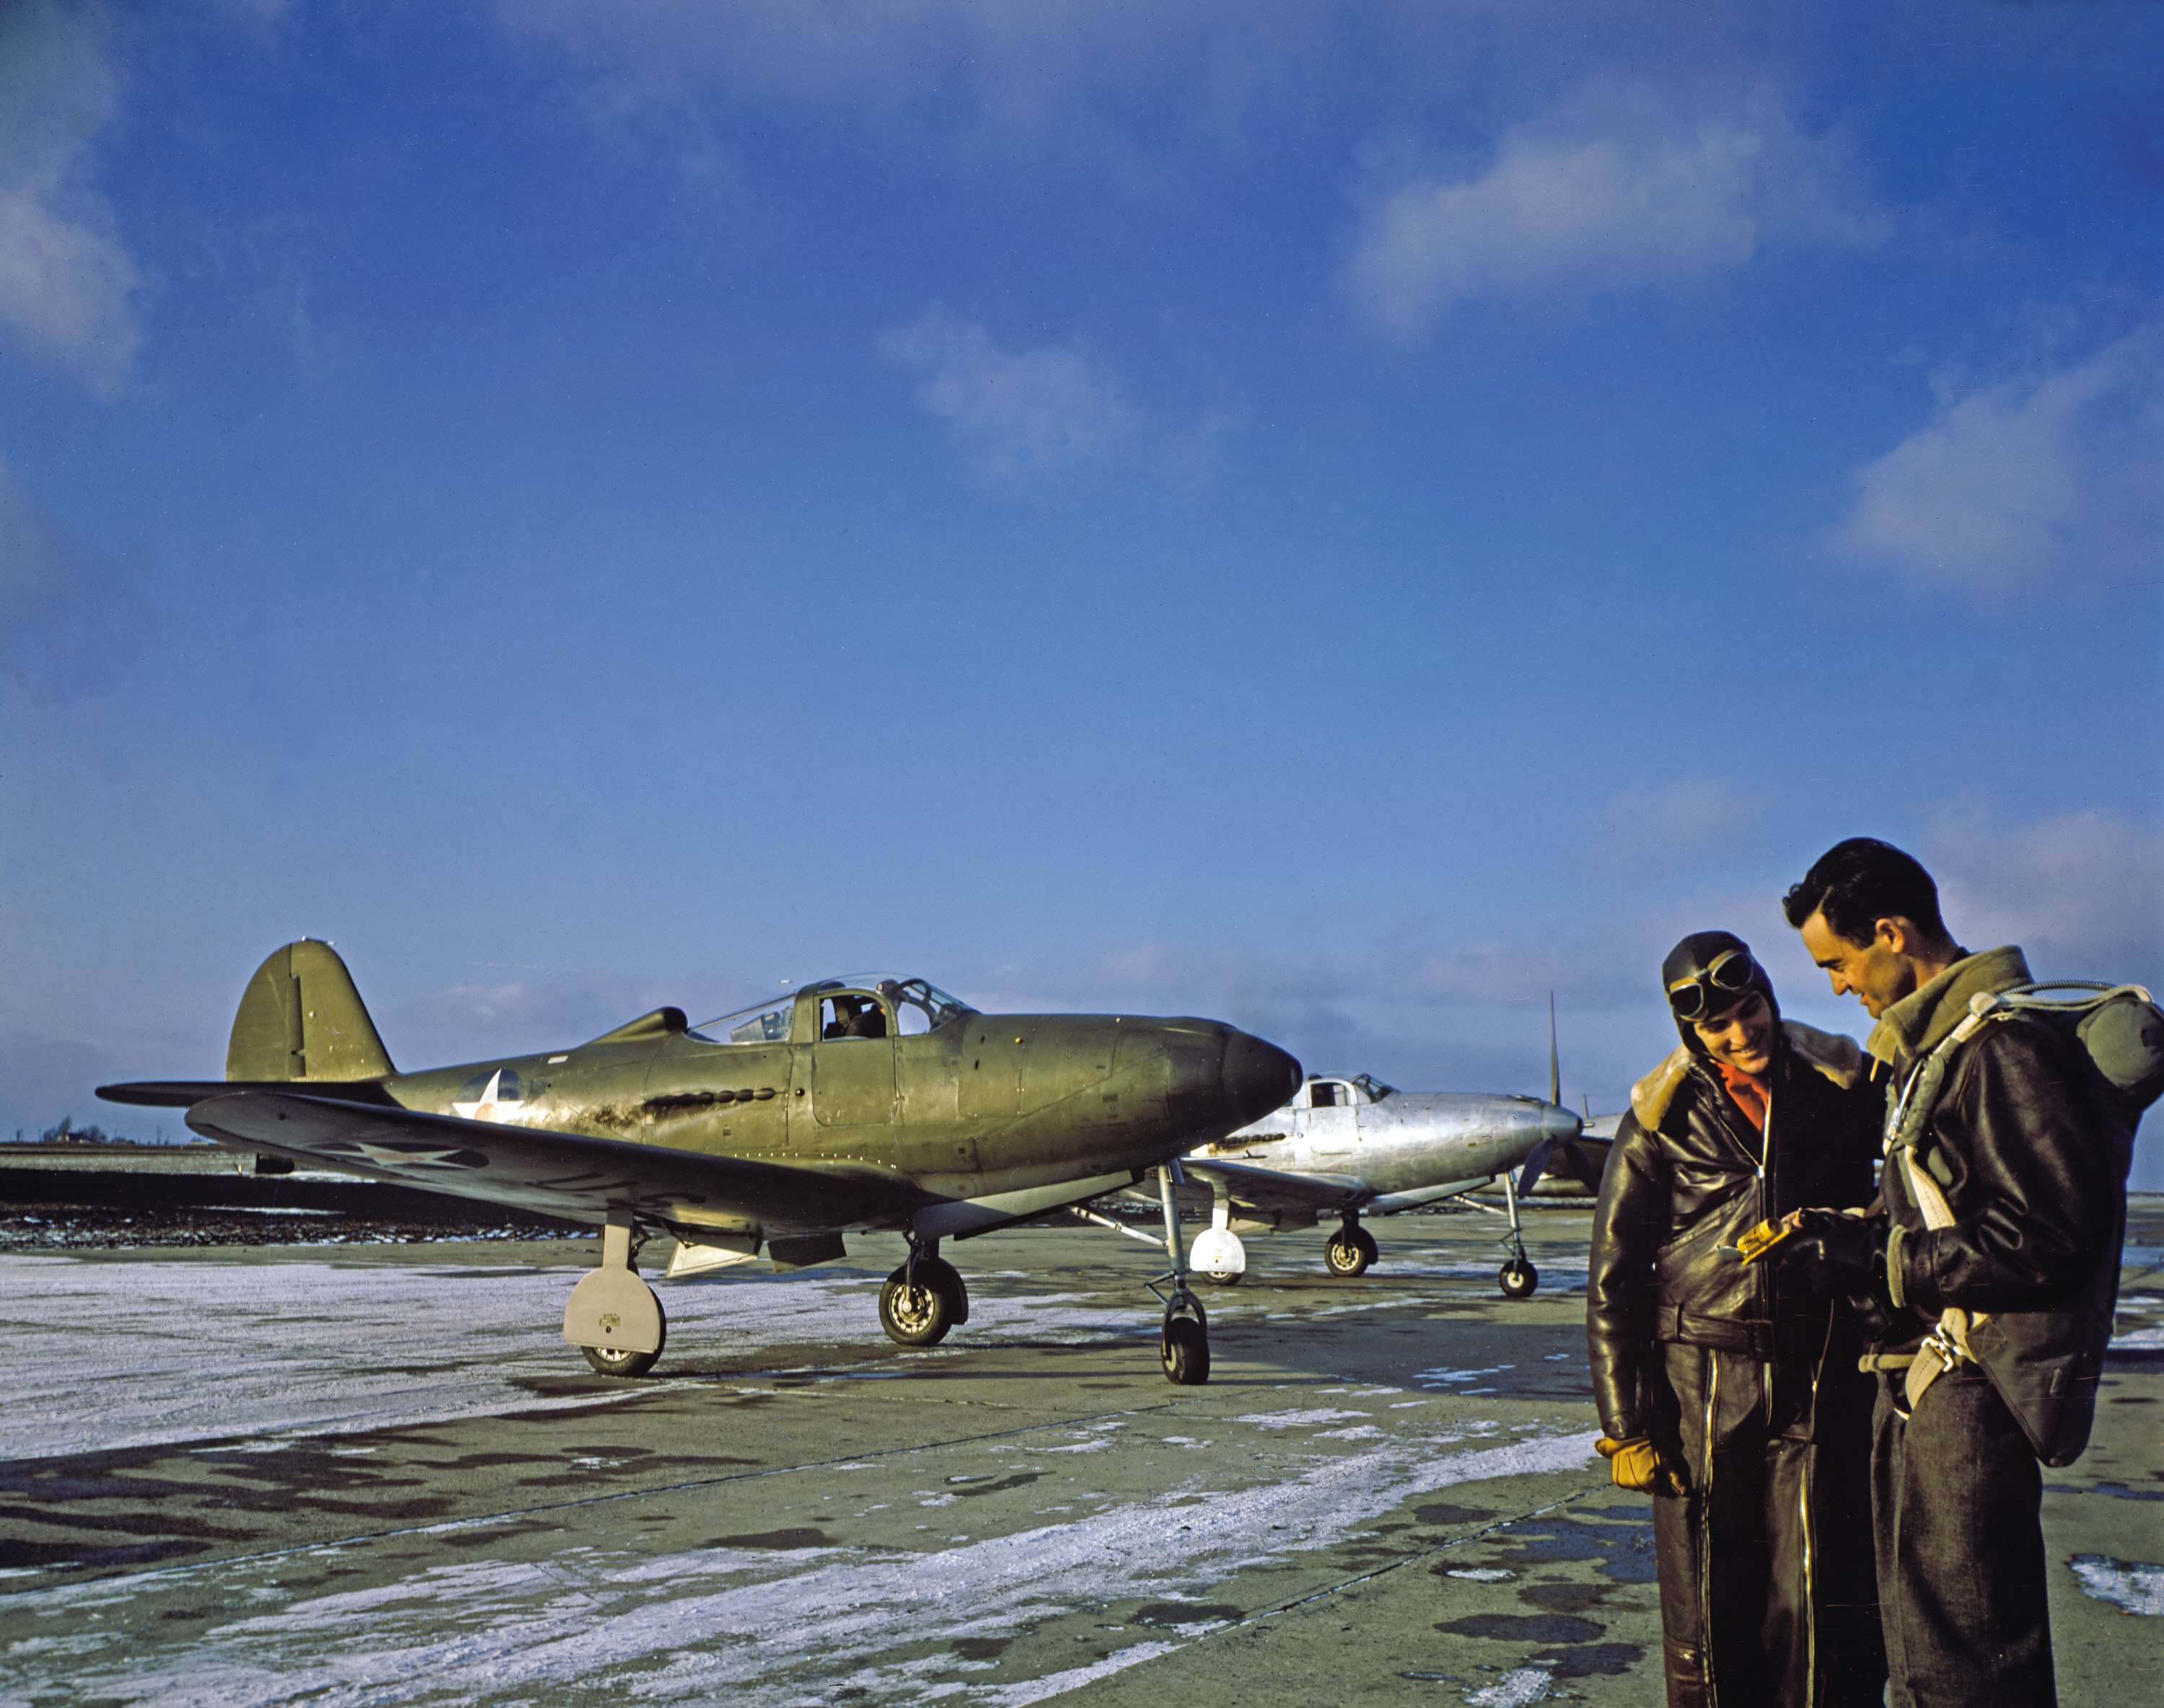 bell aircraft winter 1943 niagara falls 09.jpg